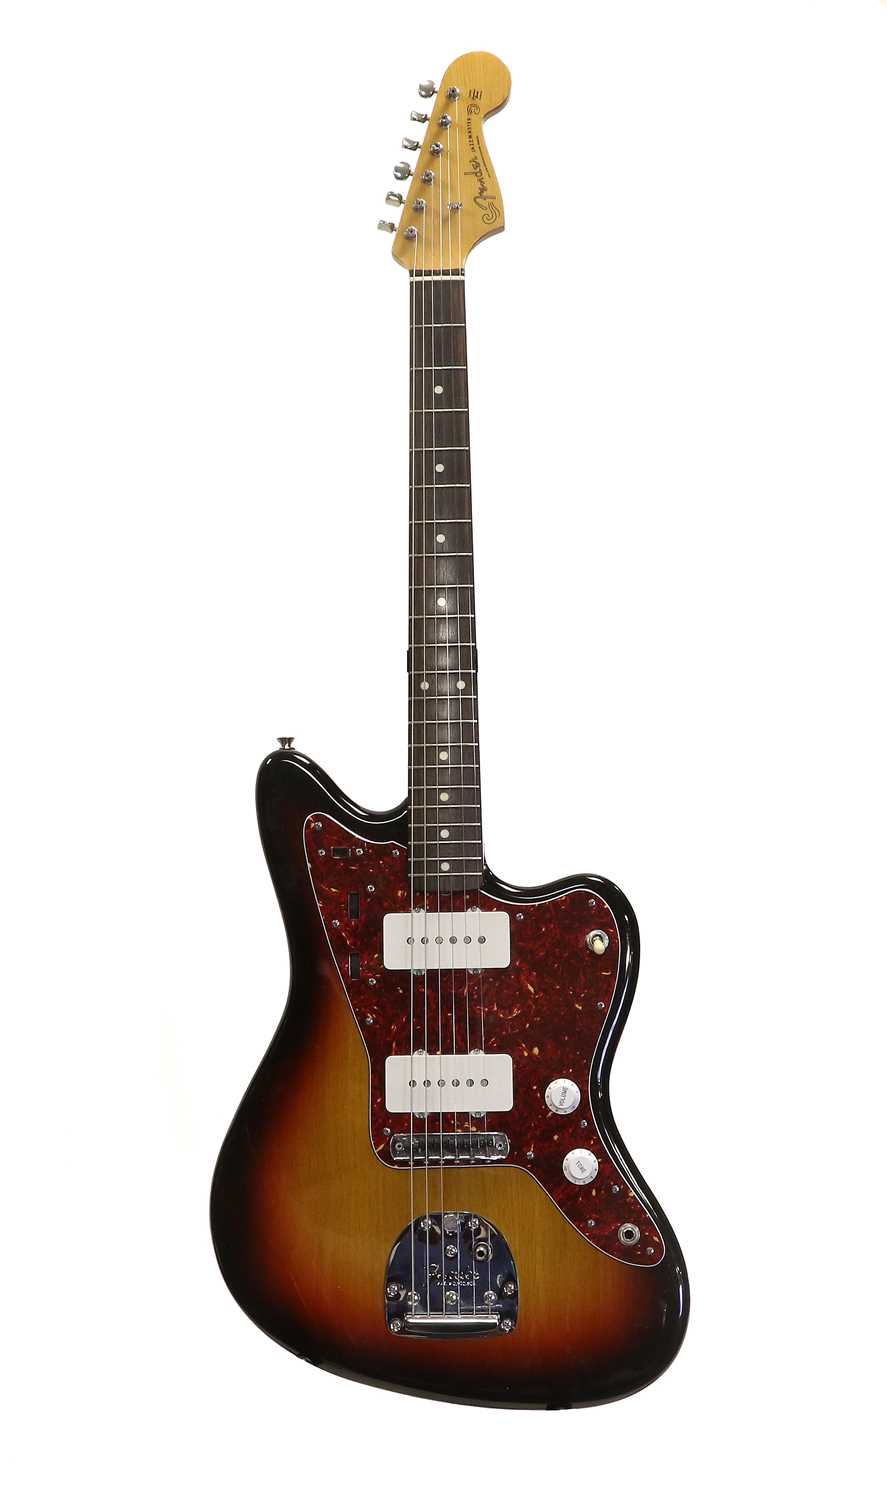 Fender Jazzmaster Electric Guitar